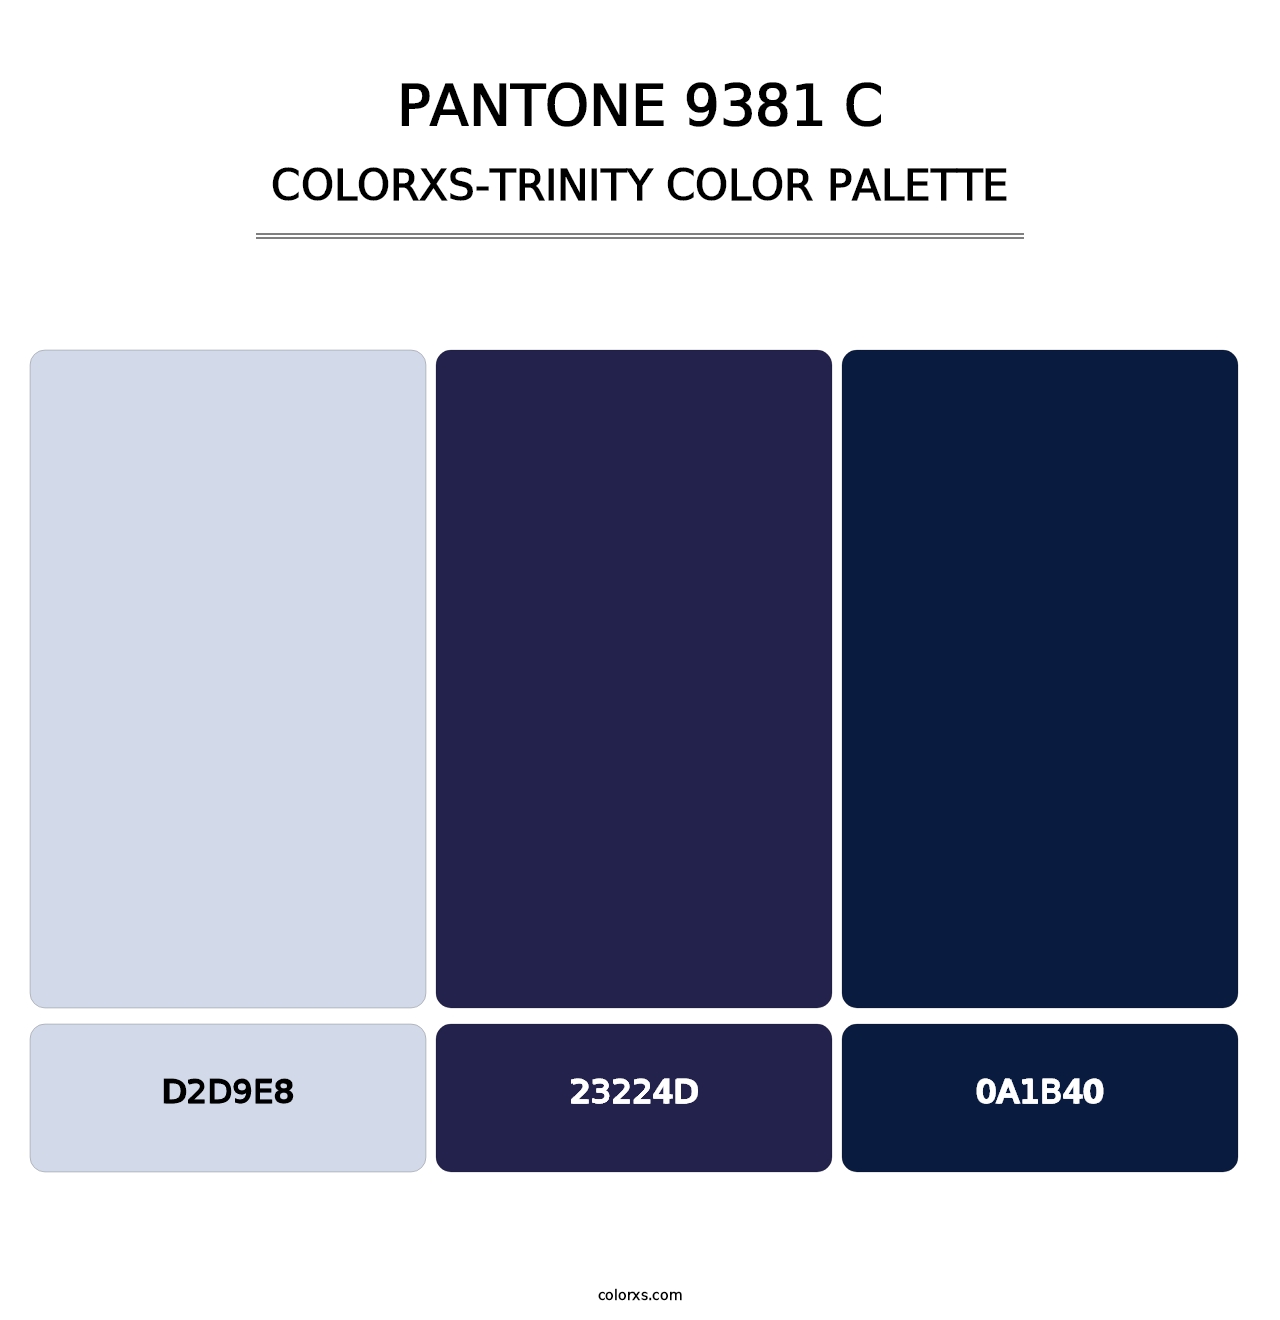 PANTONE 9381 C - Colorxs Trinity Palette